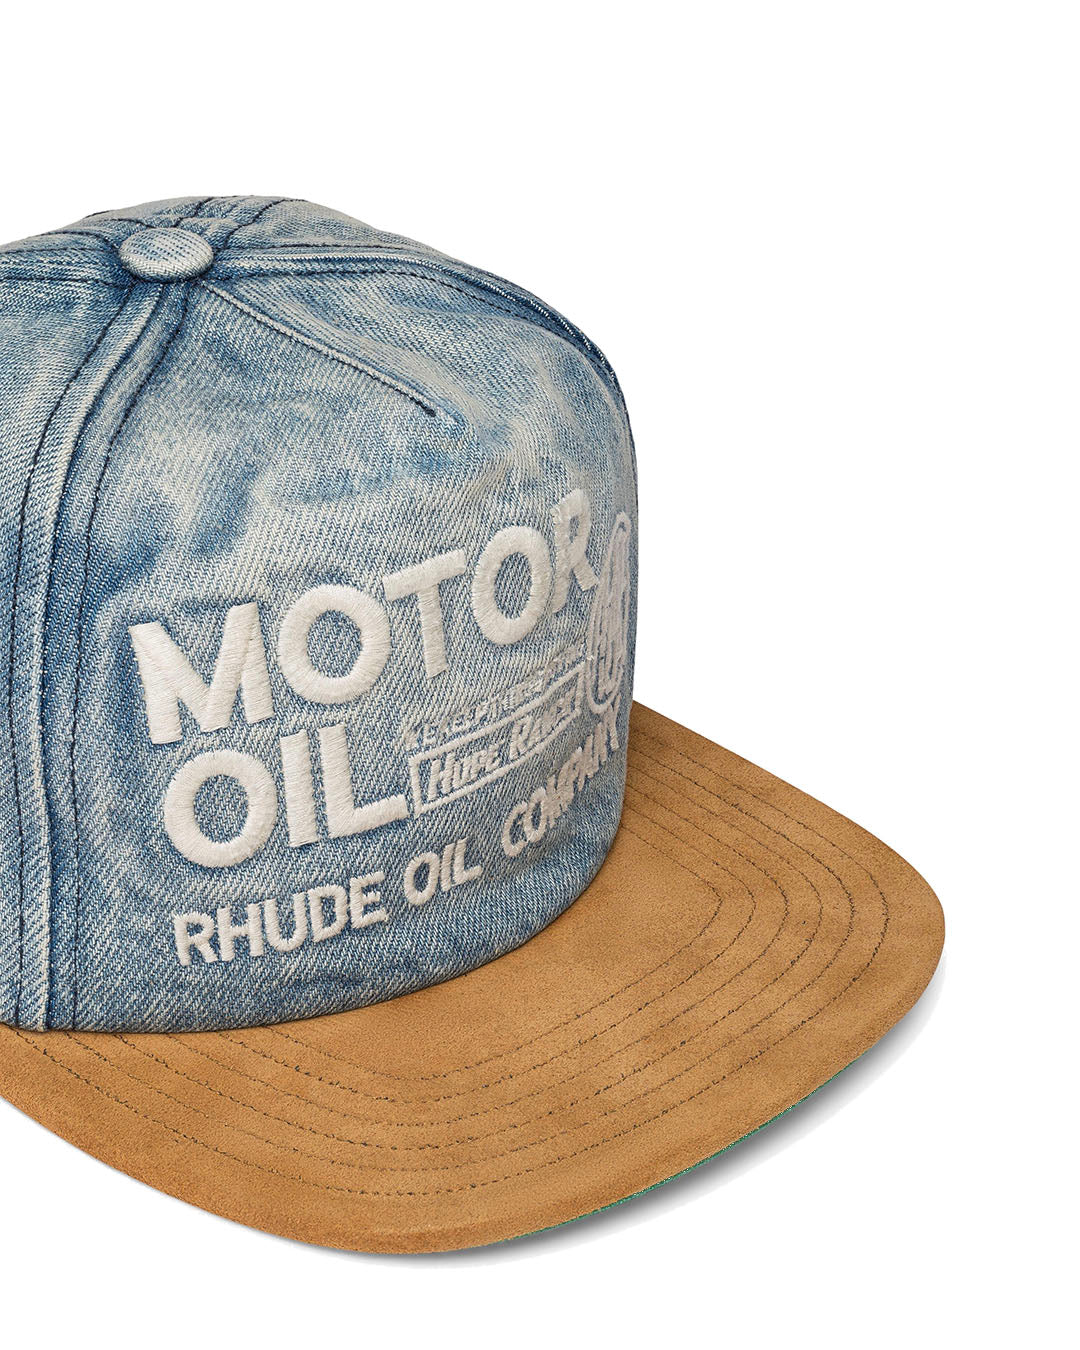 RHUDE MOTOR OIL HAT